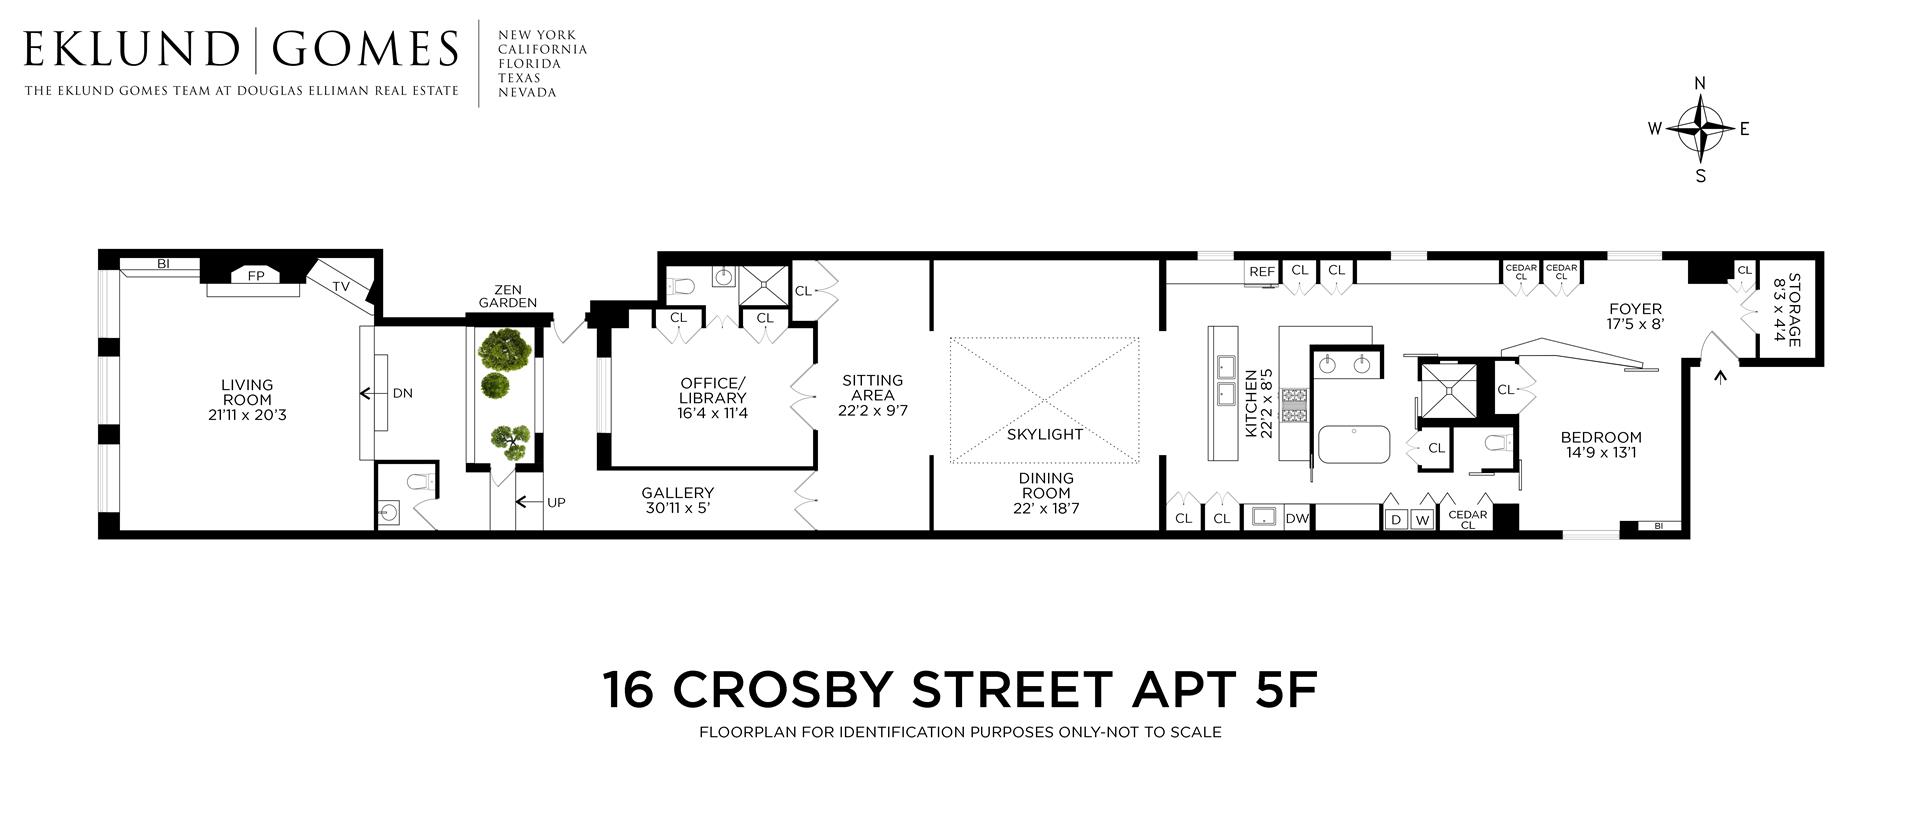 Floorplan for 16 Crosby Street, LOFT5F